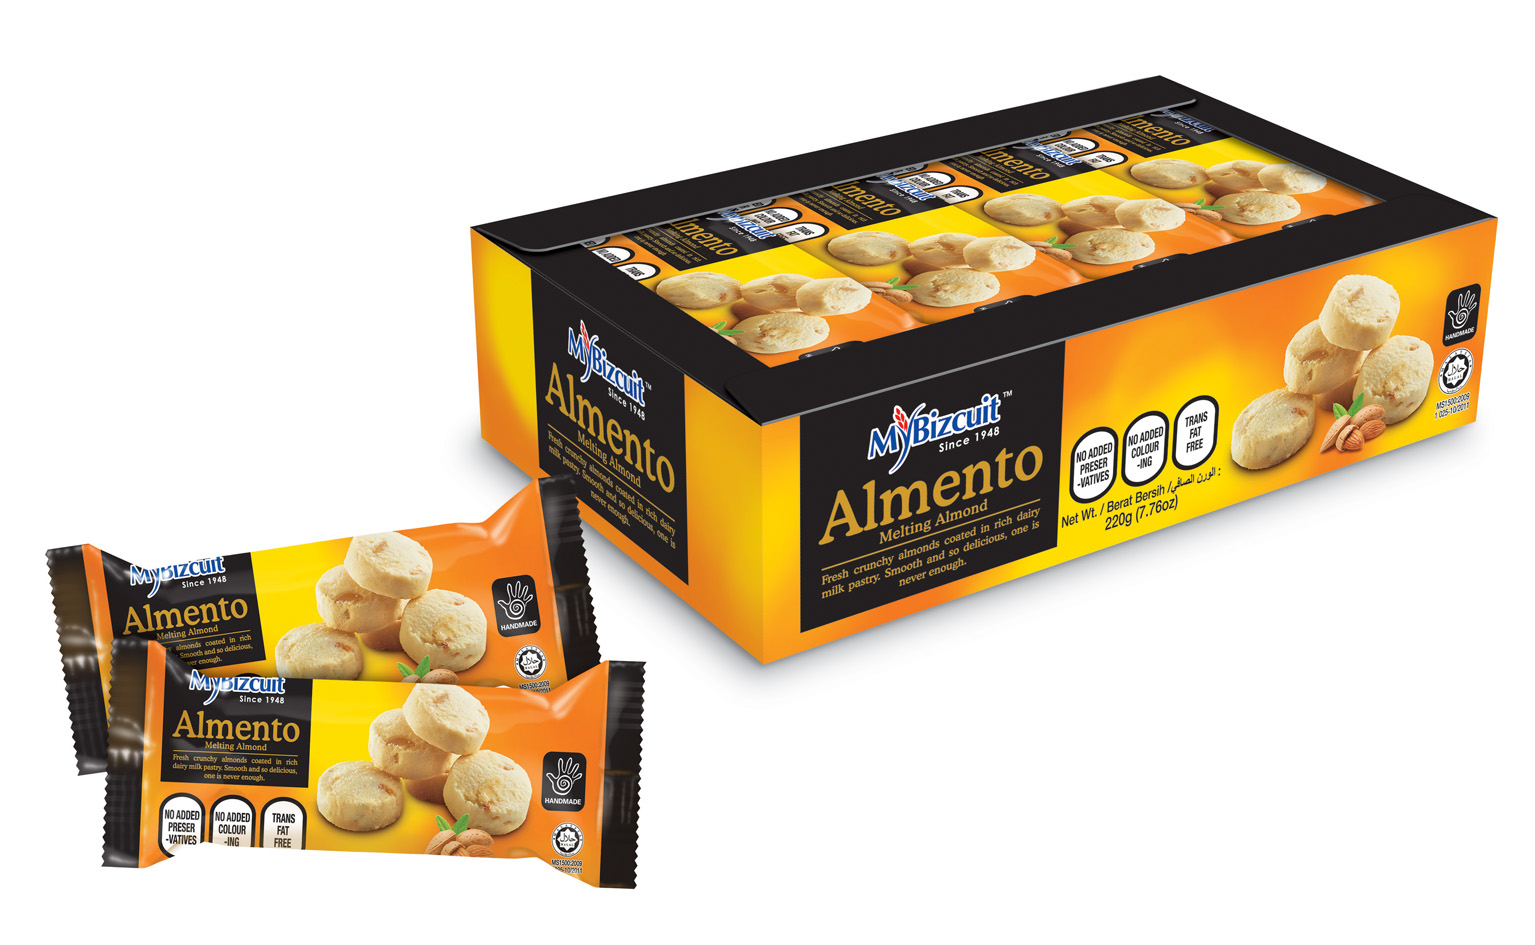 MY 01 Almento Melting Almond (20 Units Per Carton)